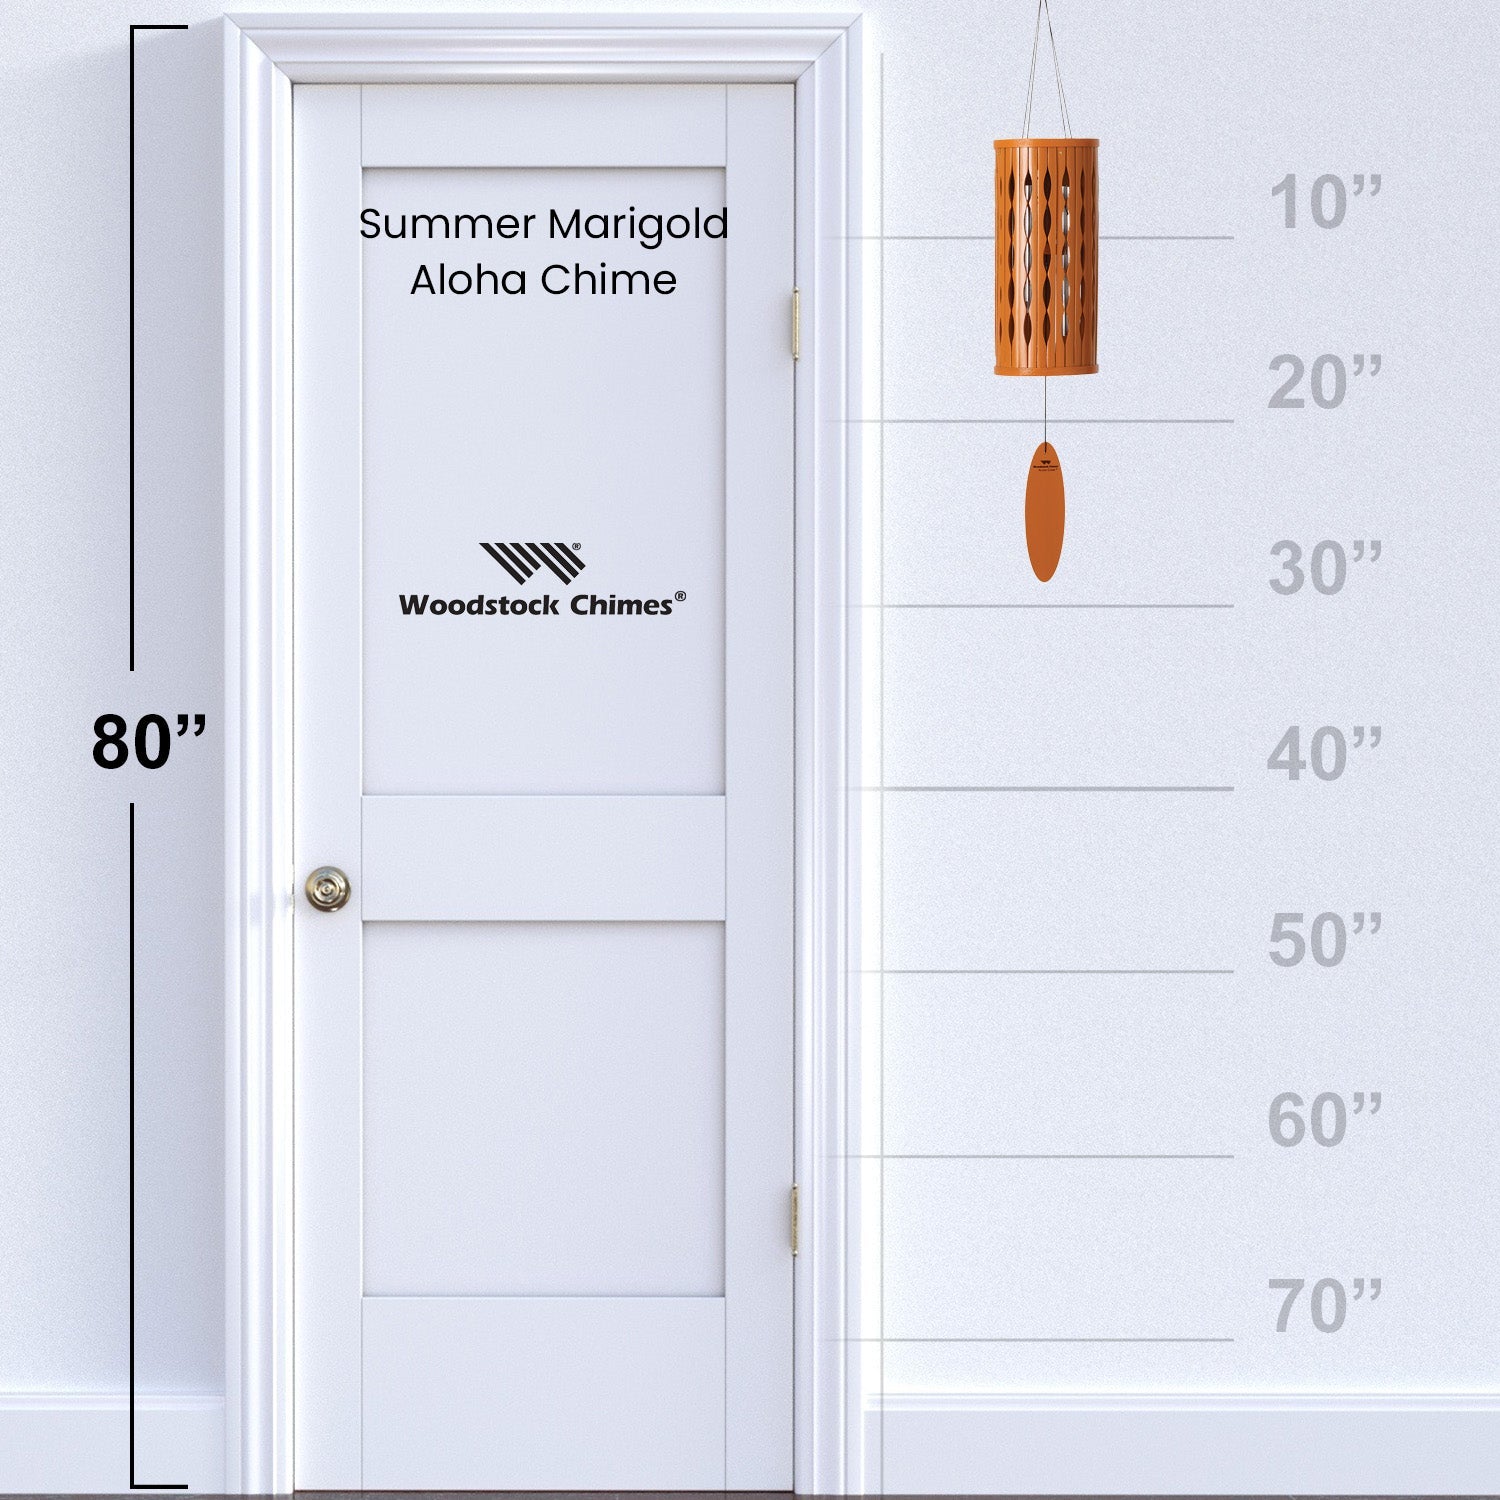 Aloha Chime™ - Summer Marigold proportion image